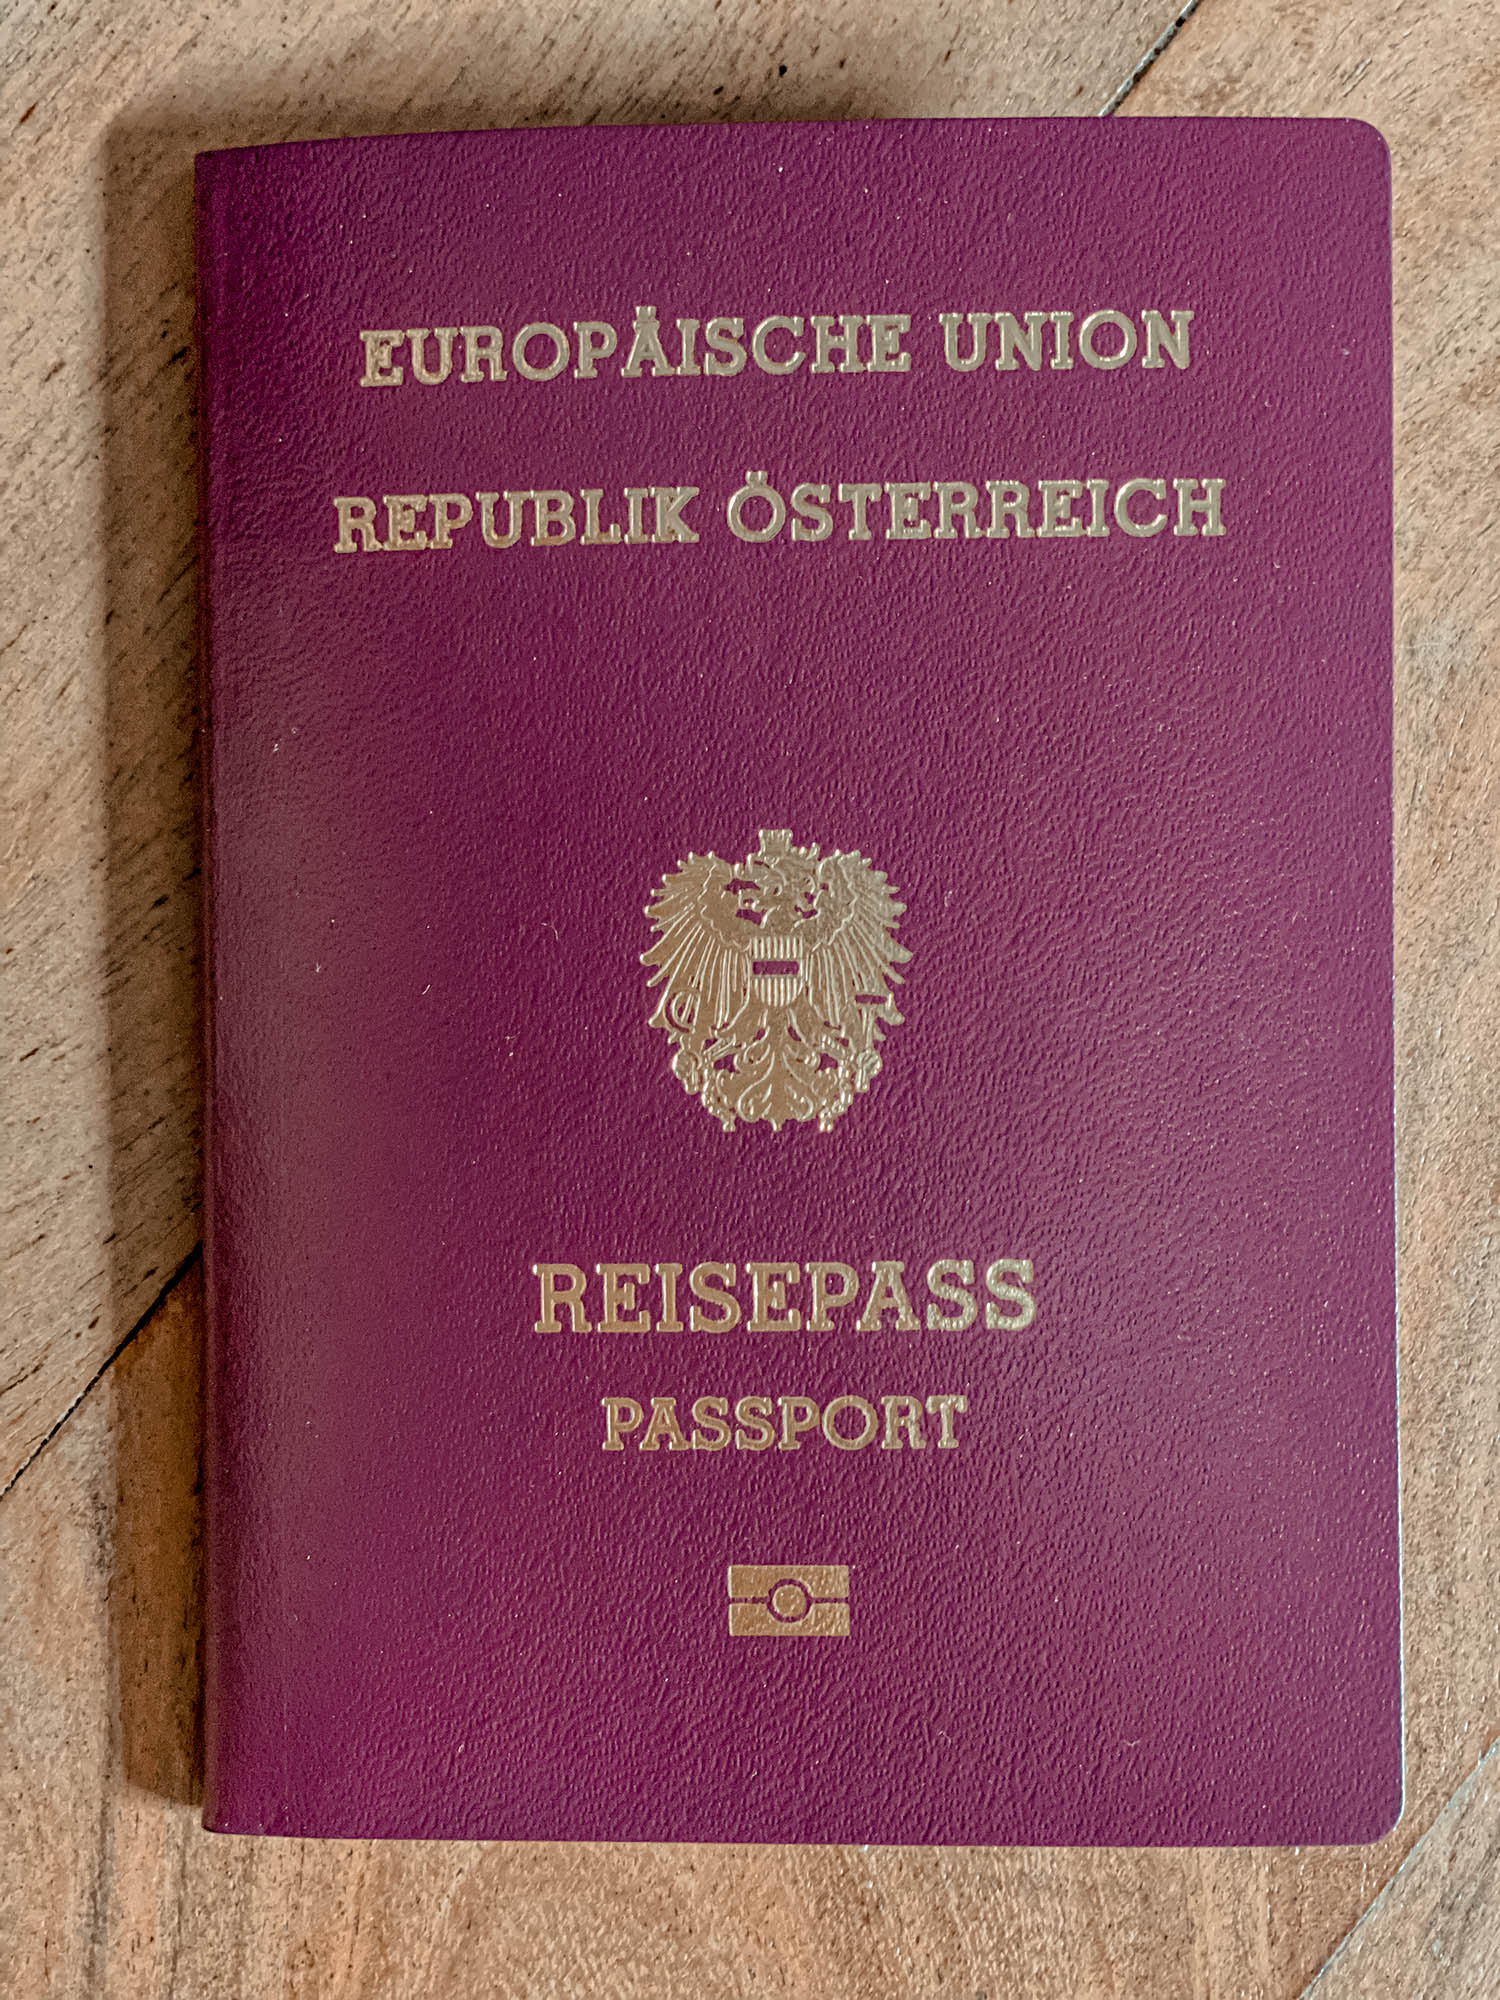 Ben's Austrian passport